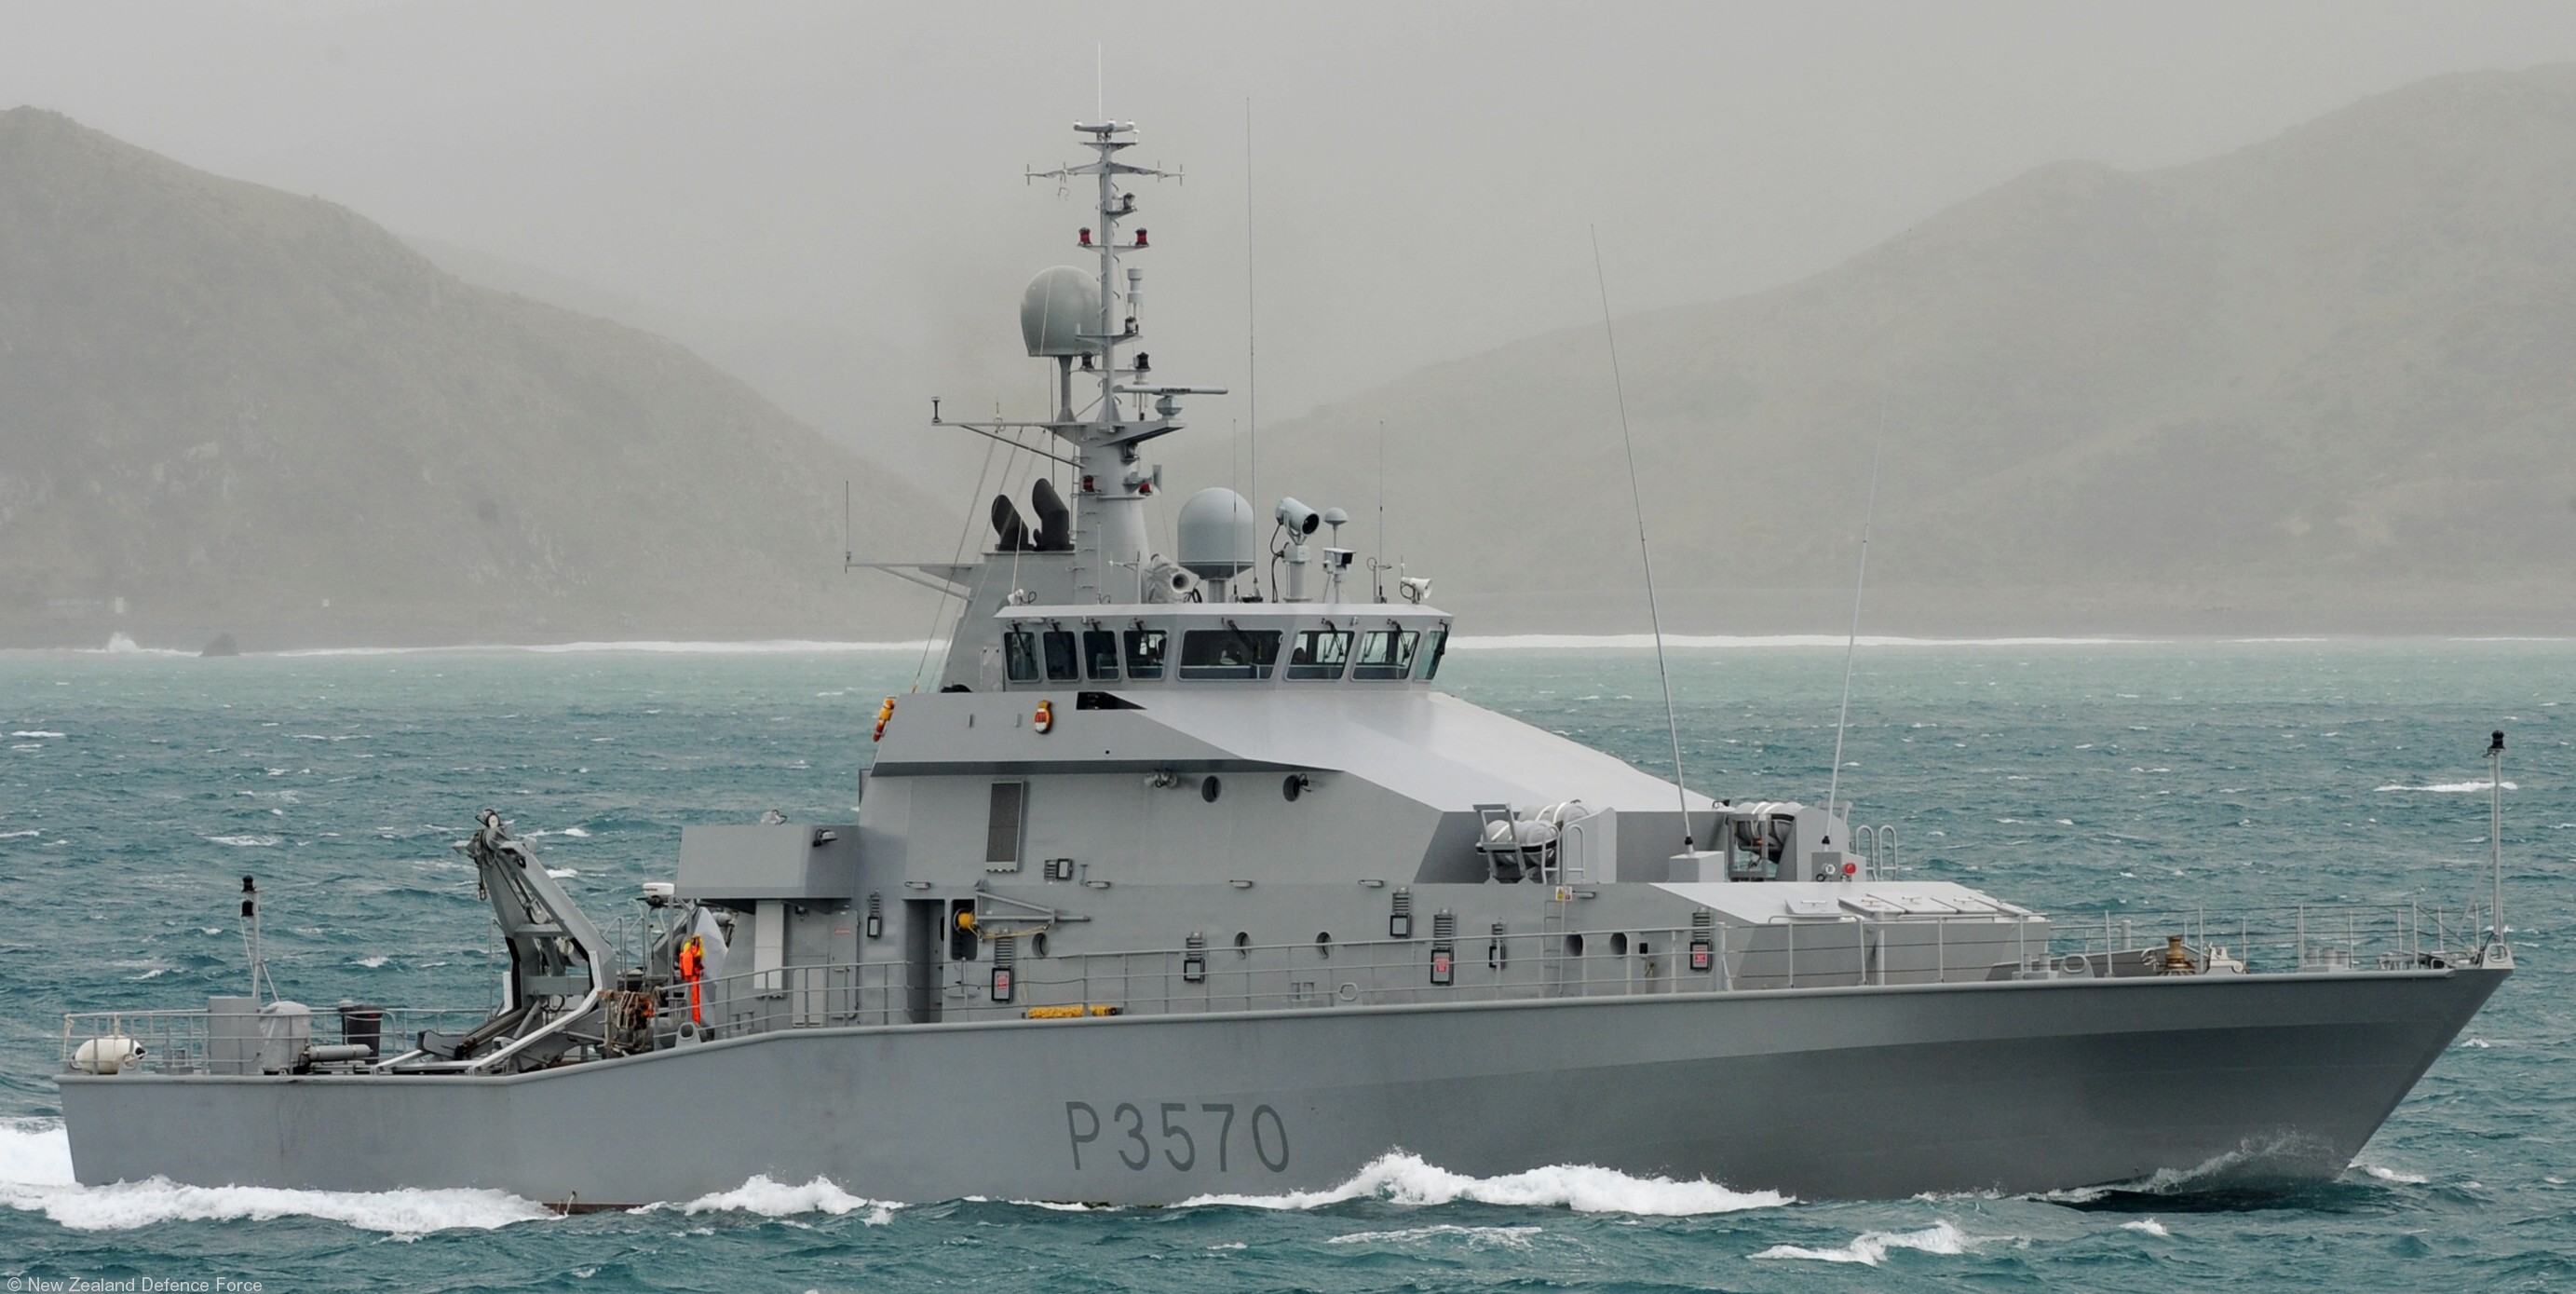 p-3570 hmnzs taupo protector class inshore patrol vessel royal new zealand navy 08